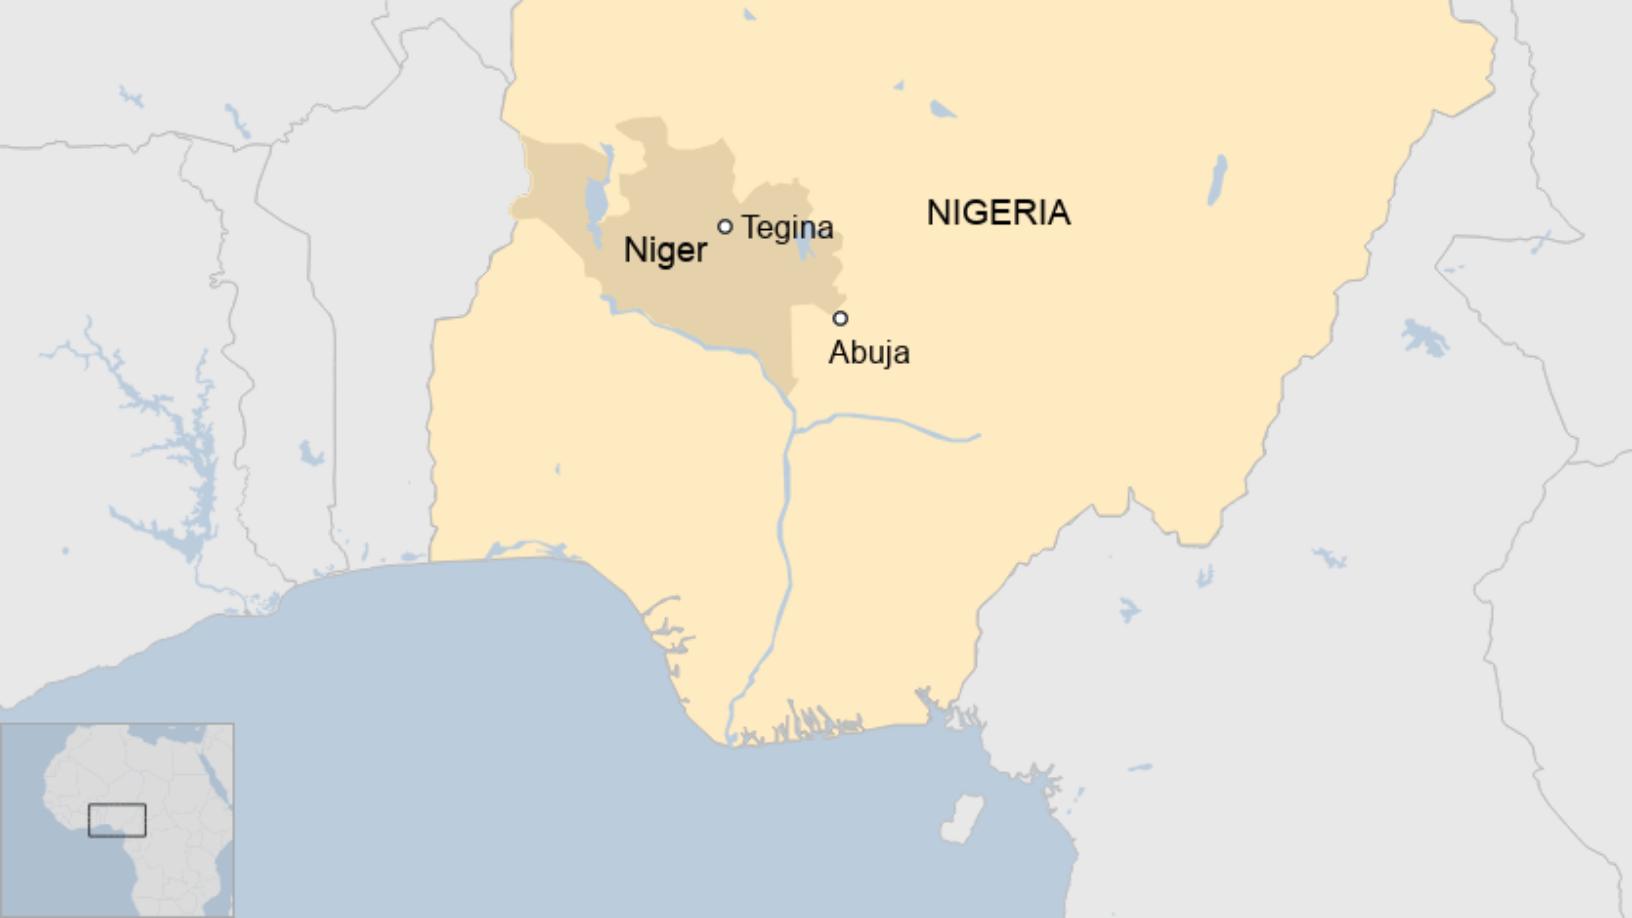 Gunmen Kidnap at Least 150 Students from Islamic School in Nigeria